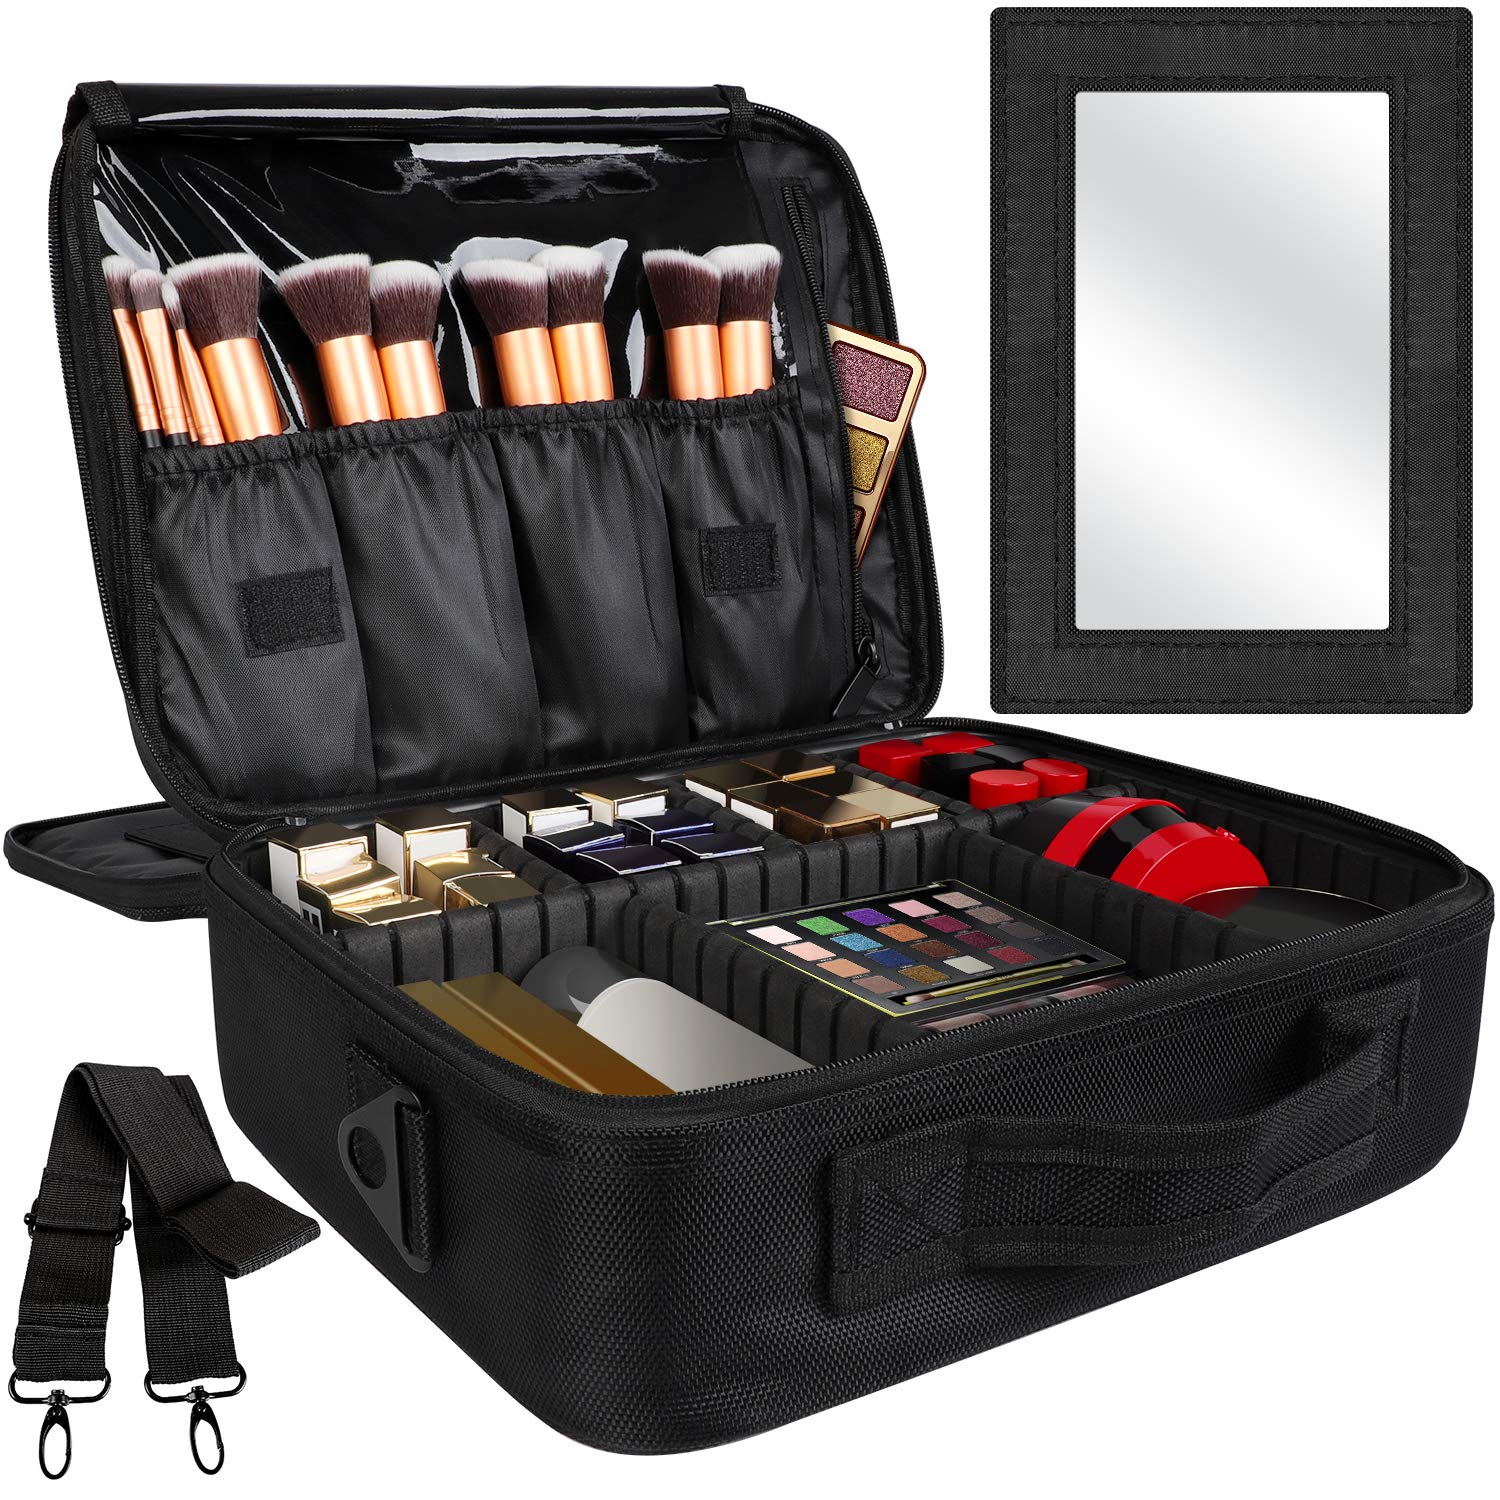 Kootek Travel Makeup Bag Double-Layer Portable Train Cosmetic Case ...